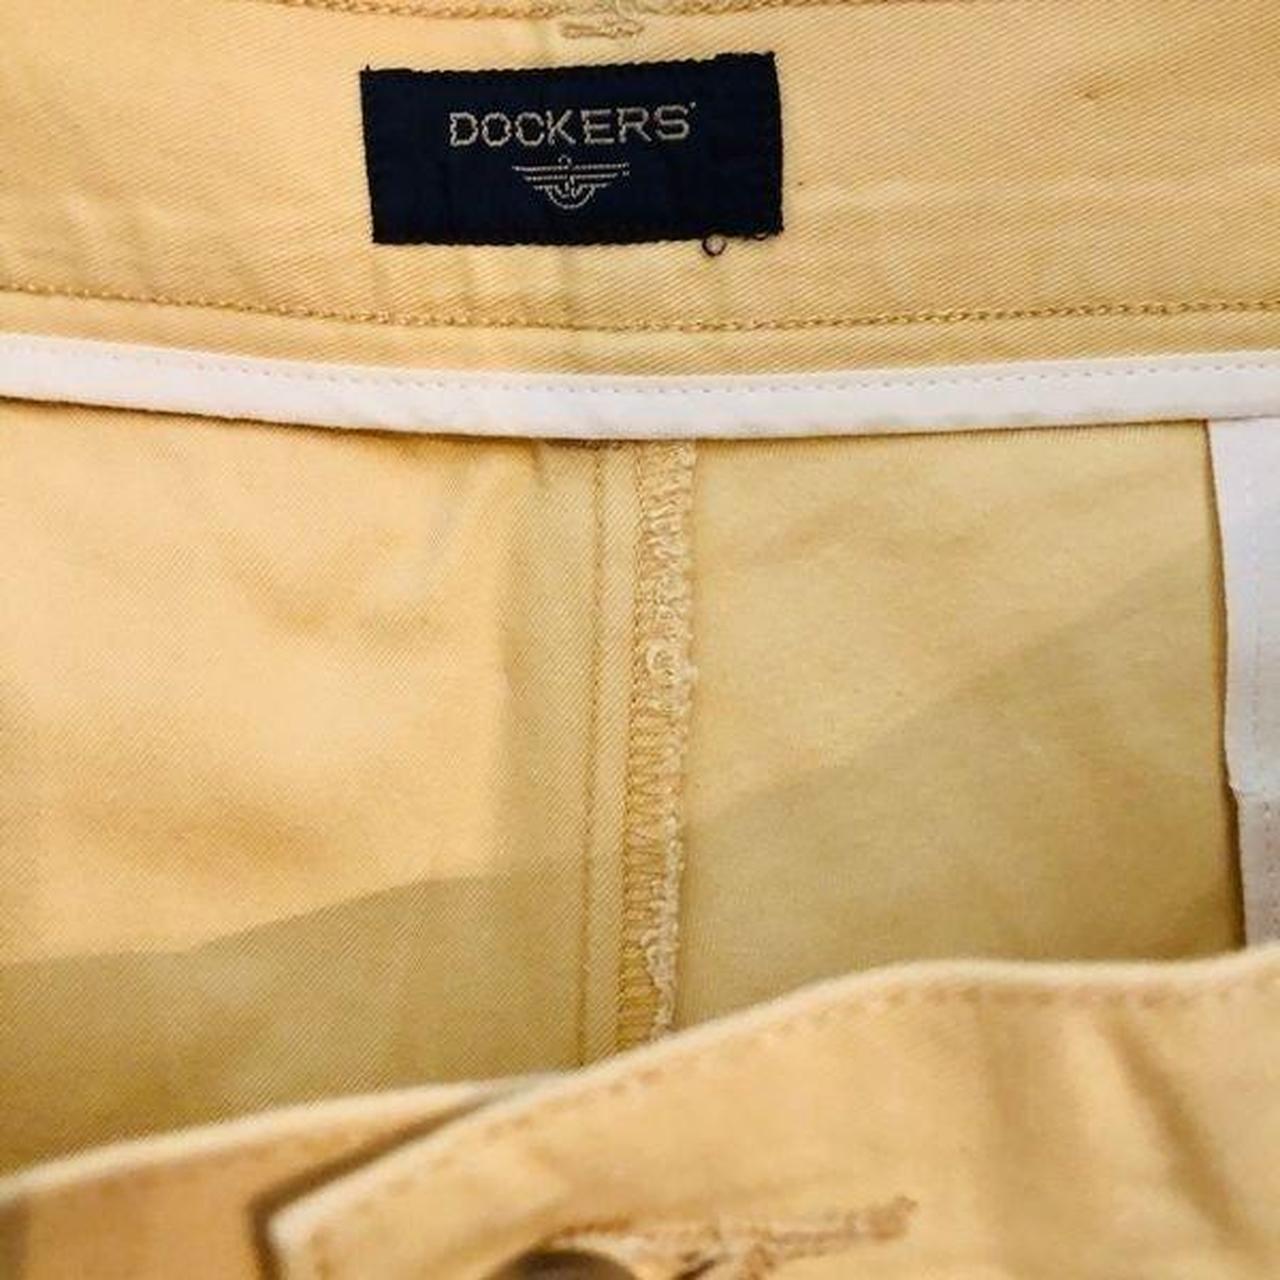 Product Image 4 - Men’s Dockers shorts. Excellent condition,